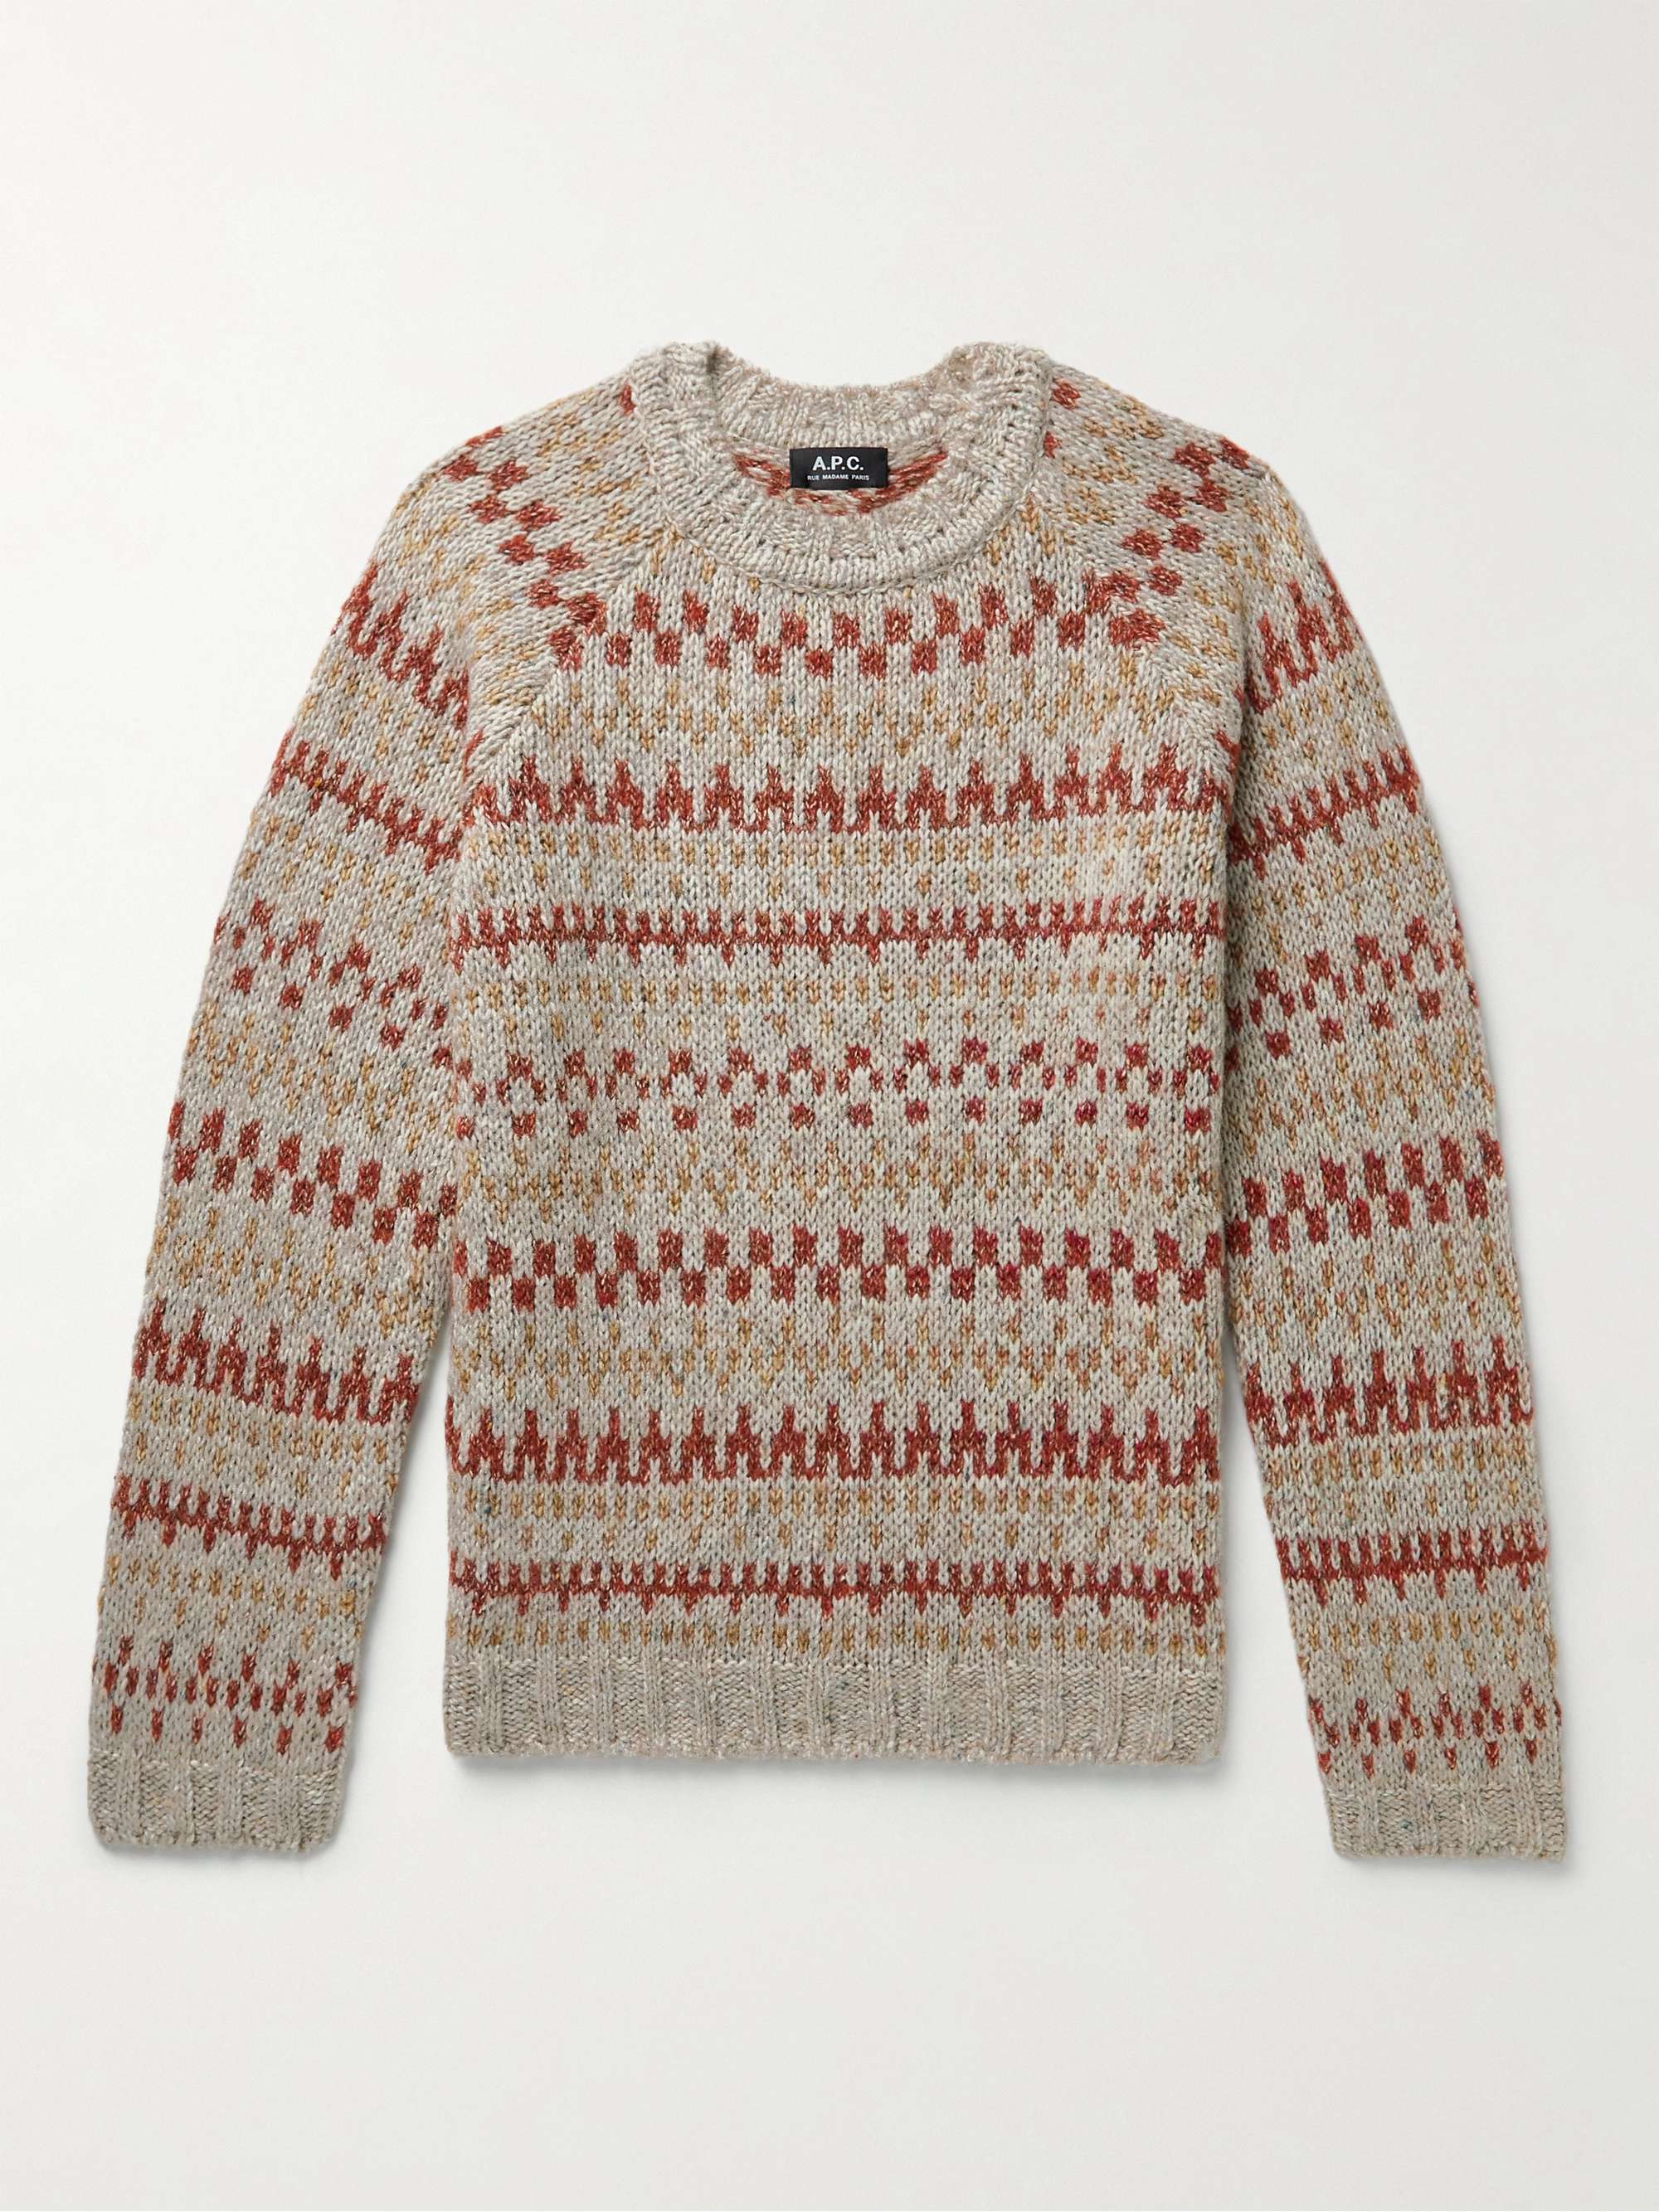 A.P.C. Léonhard Wool-Blend Jacquard Sweater for Men | MR PORTER